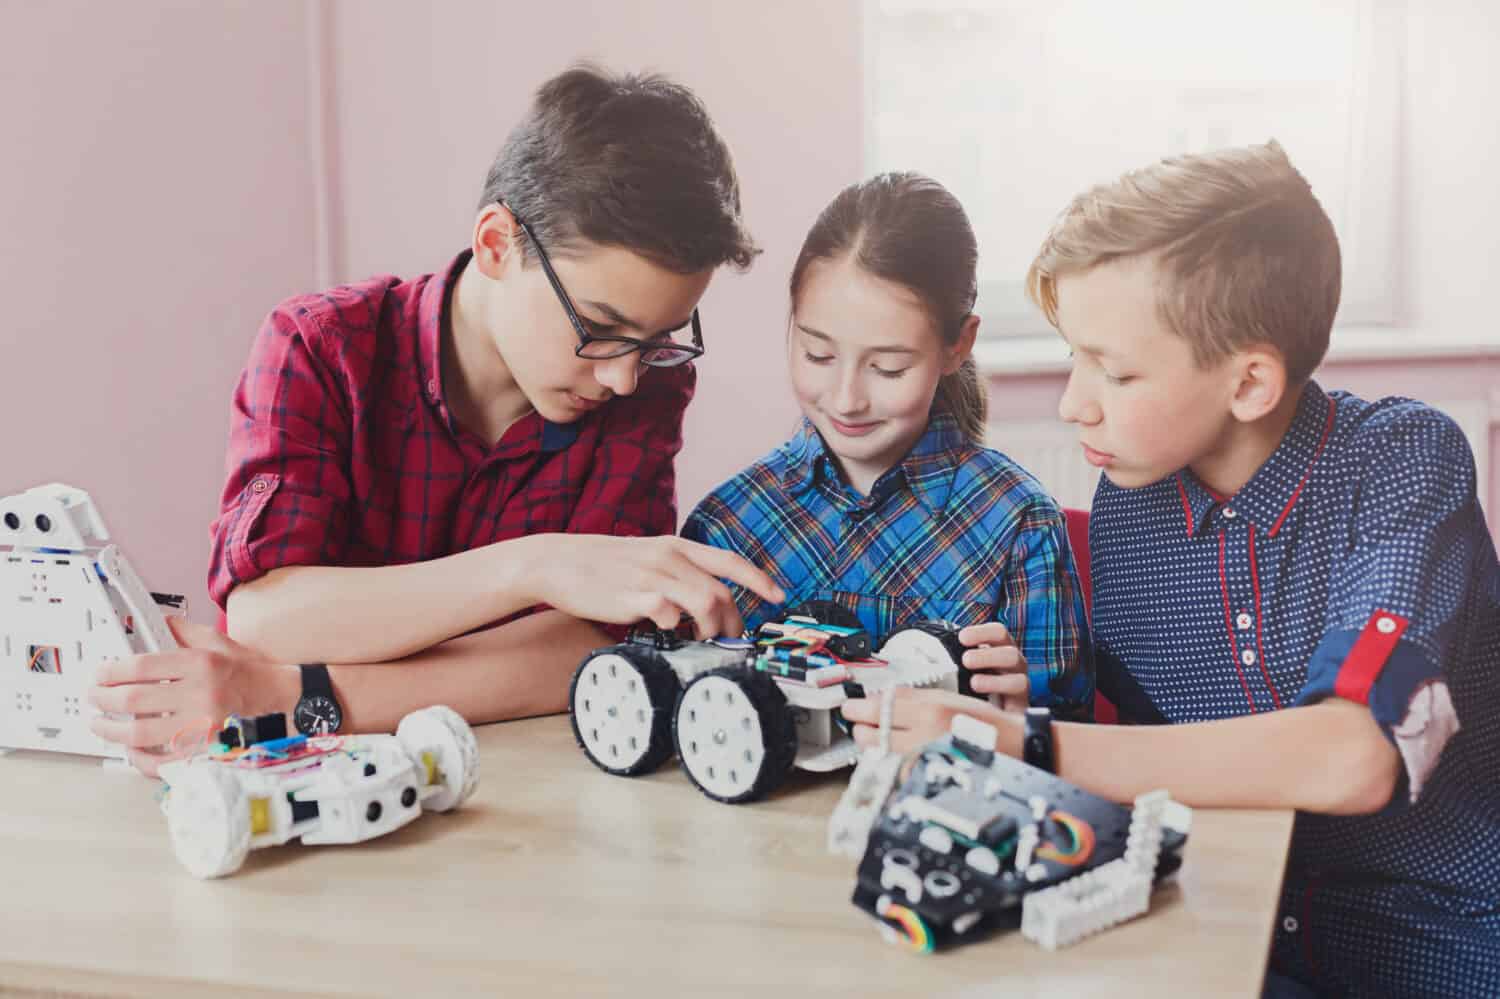 Children creating robots at school, stem education, copy space. Early development, diy, innovation, modern technology concept